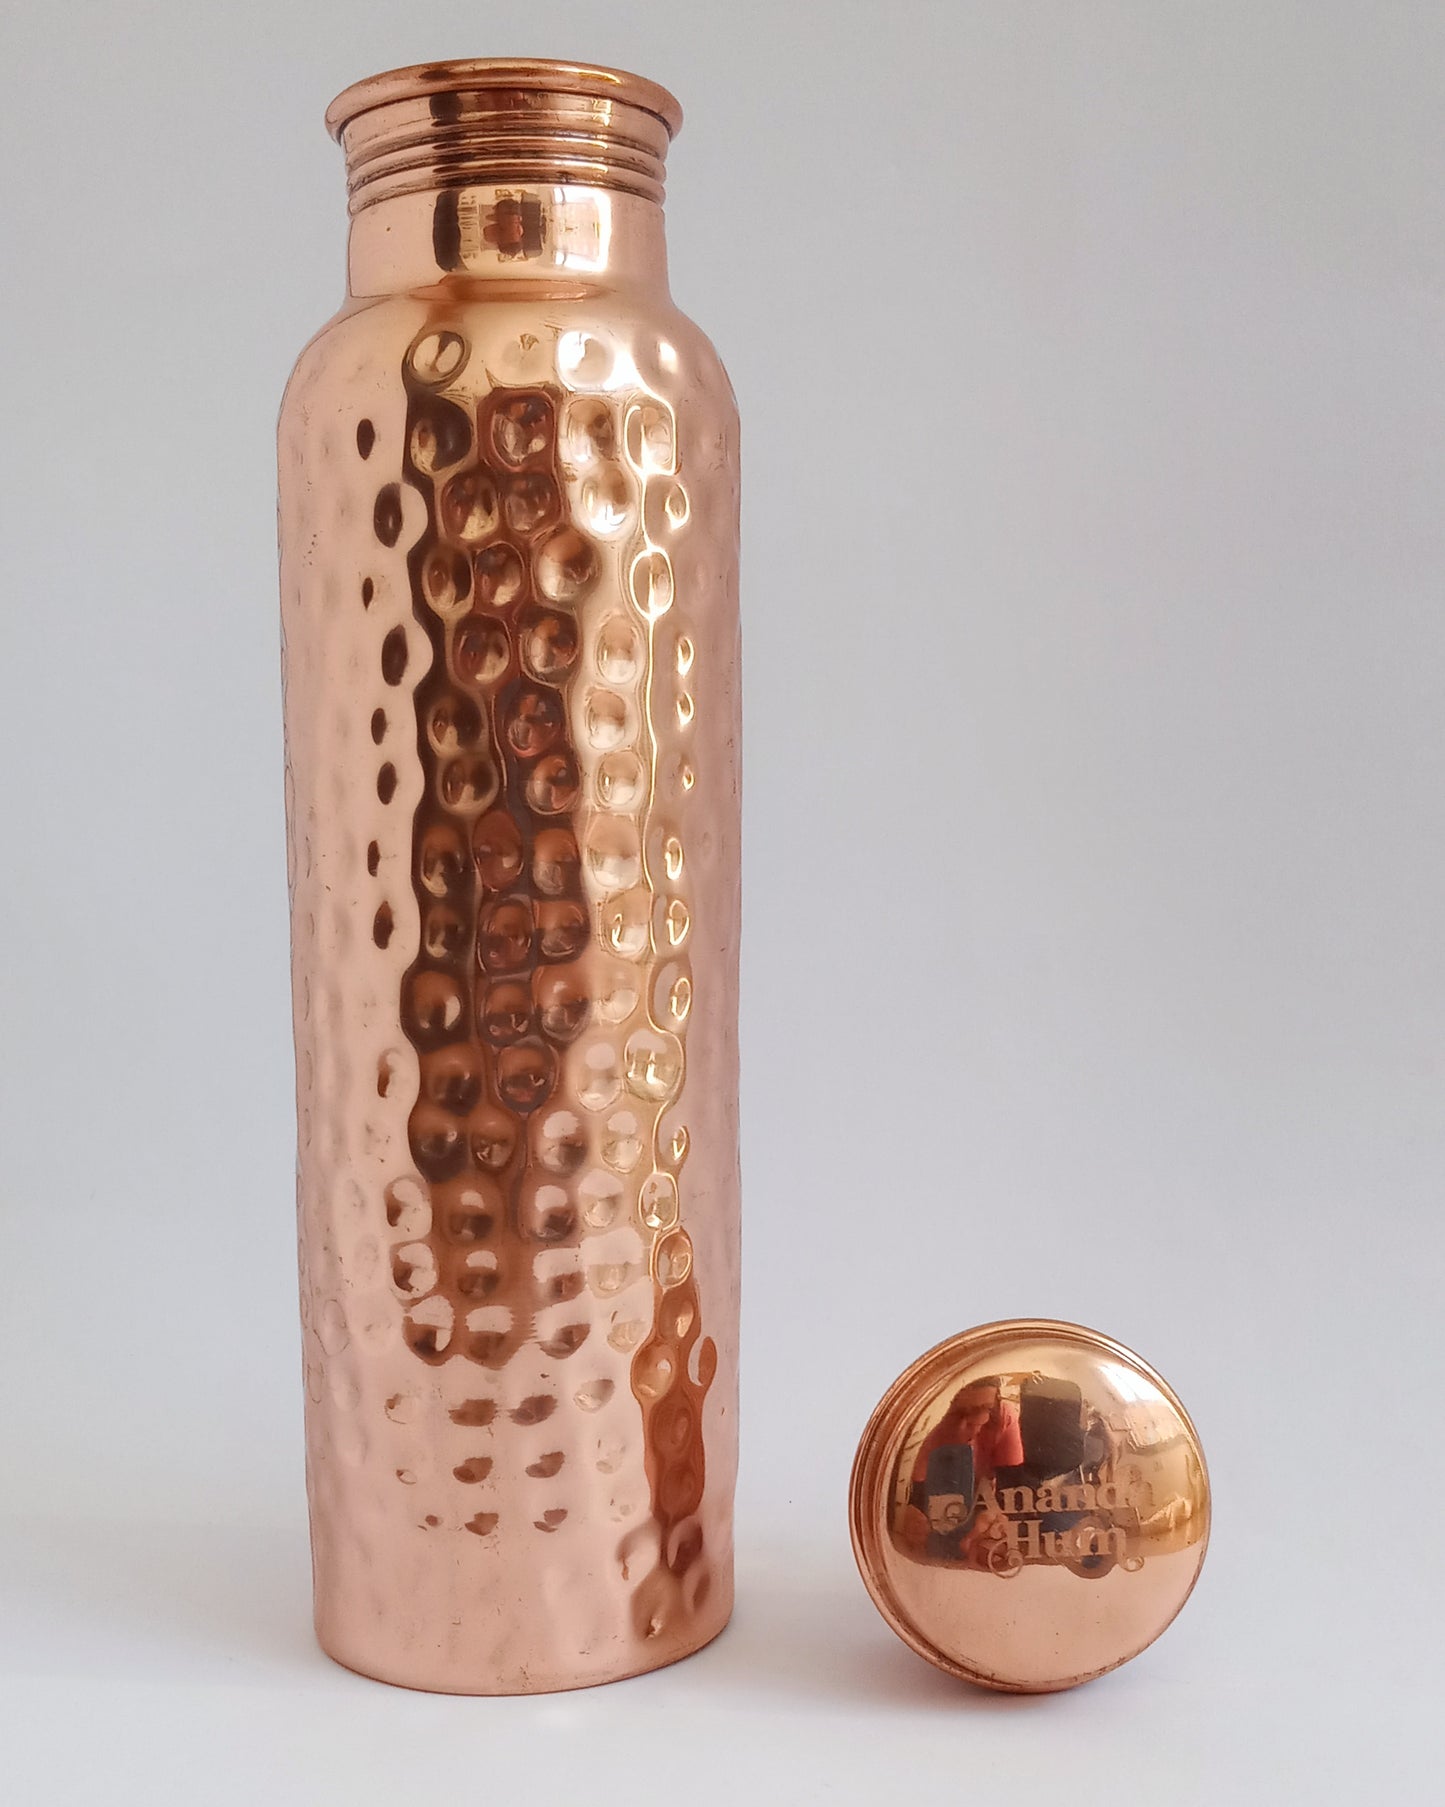 ananda hum copper water bottle